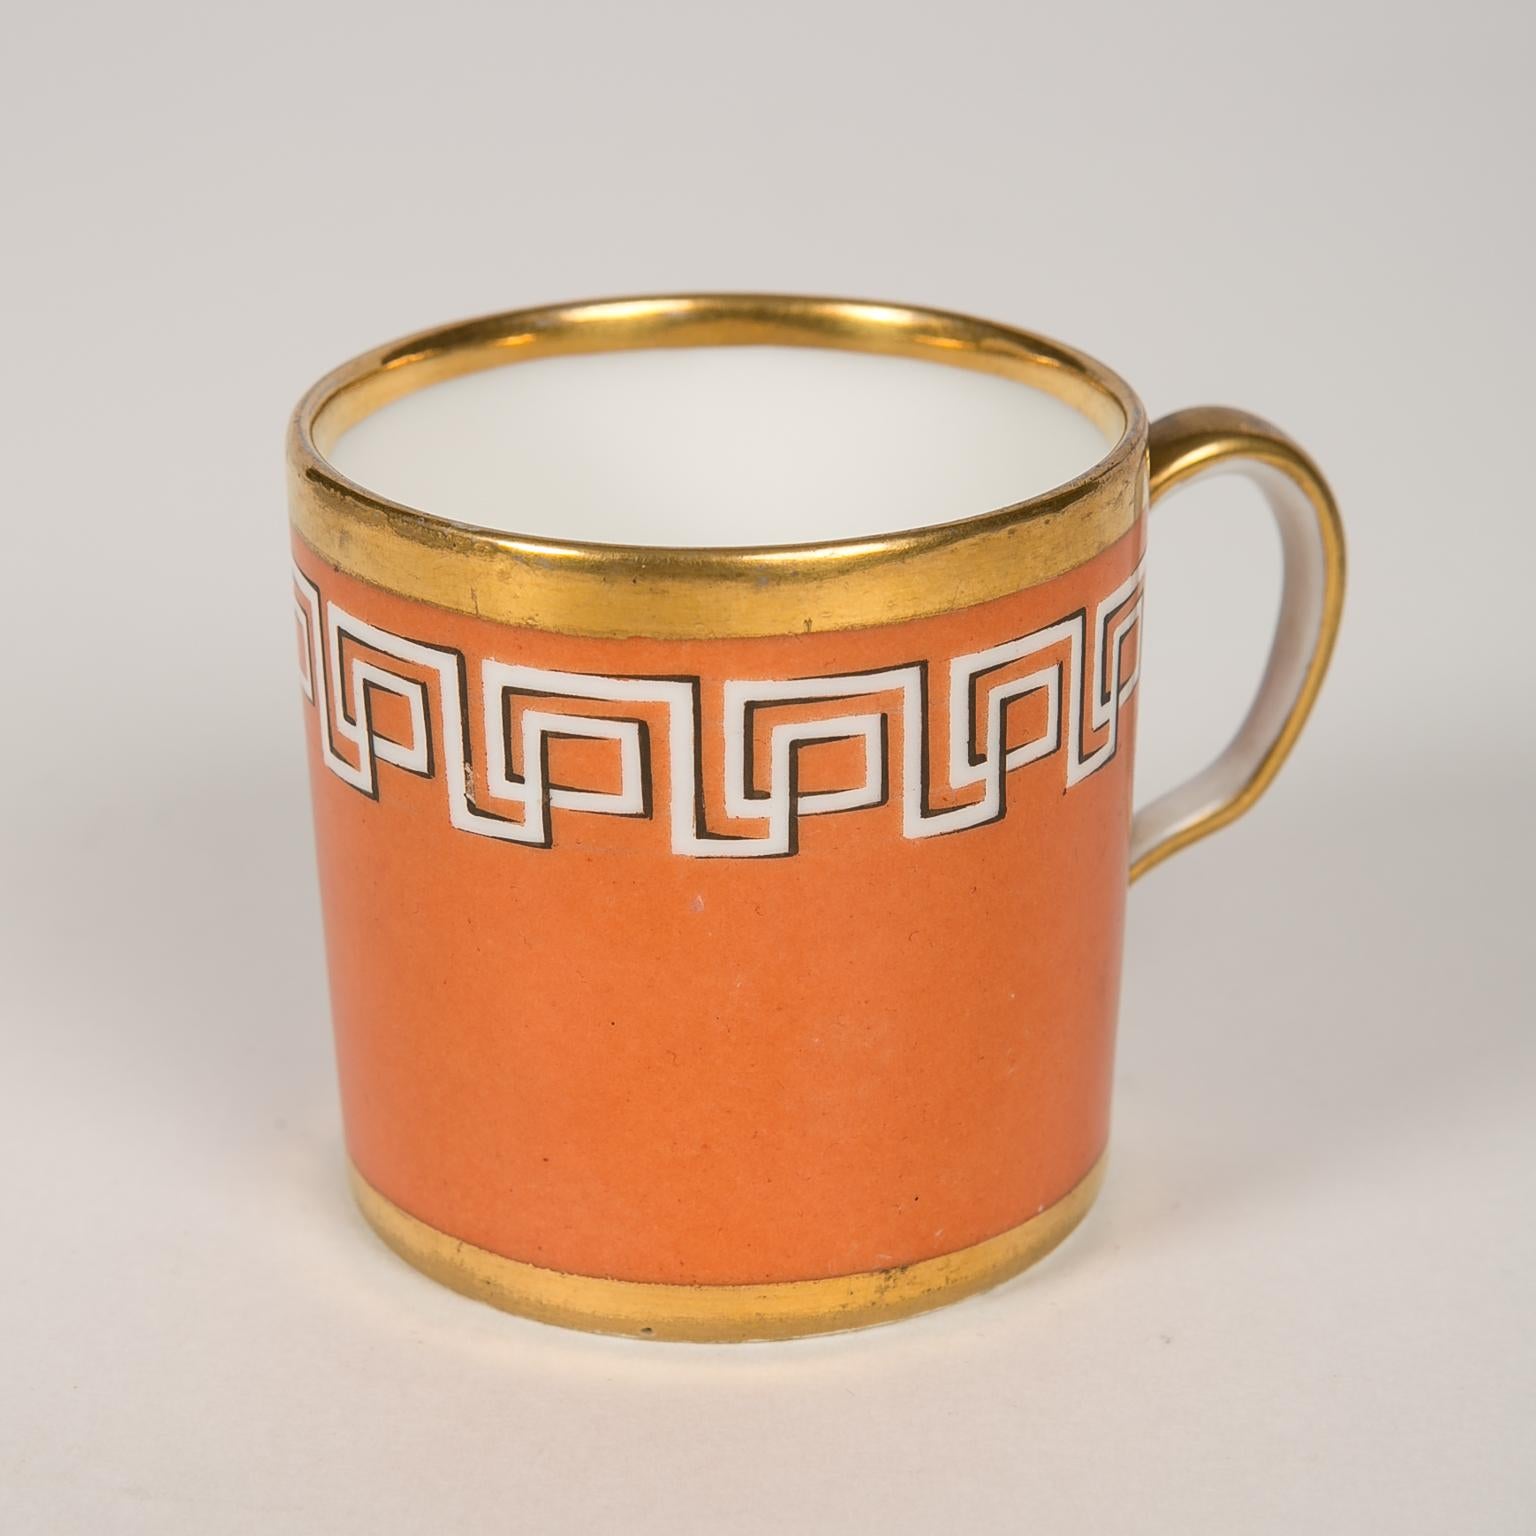 19th Century Antique Orange Cup and Saucer with Greek Key Gilt Design, England circa 1820